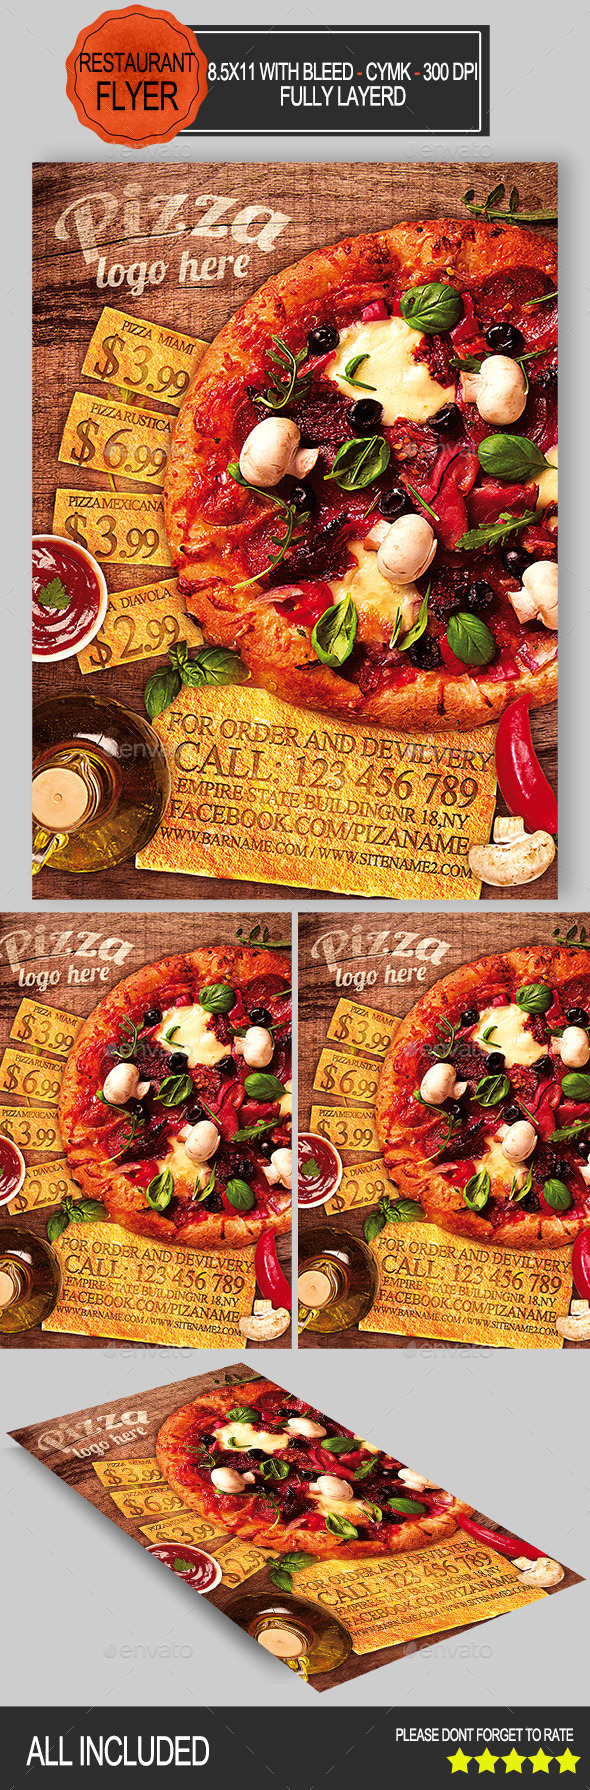 Pizza Restaurant Flyer